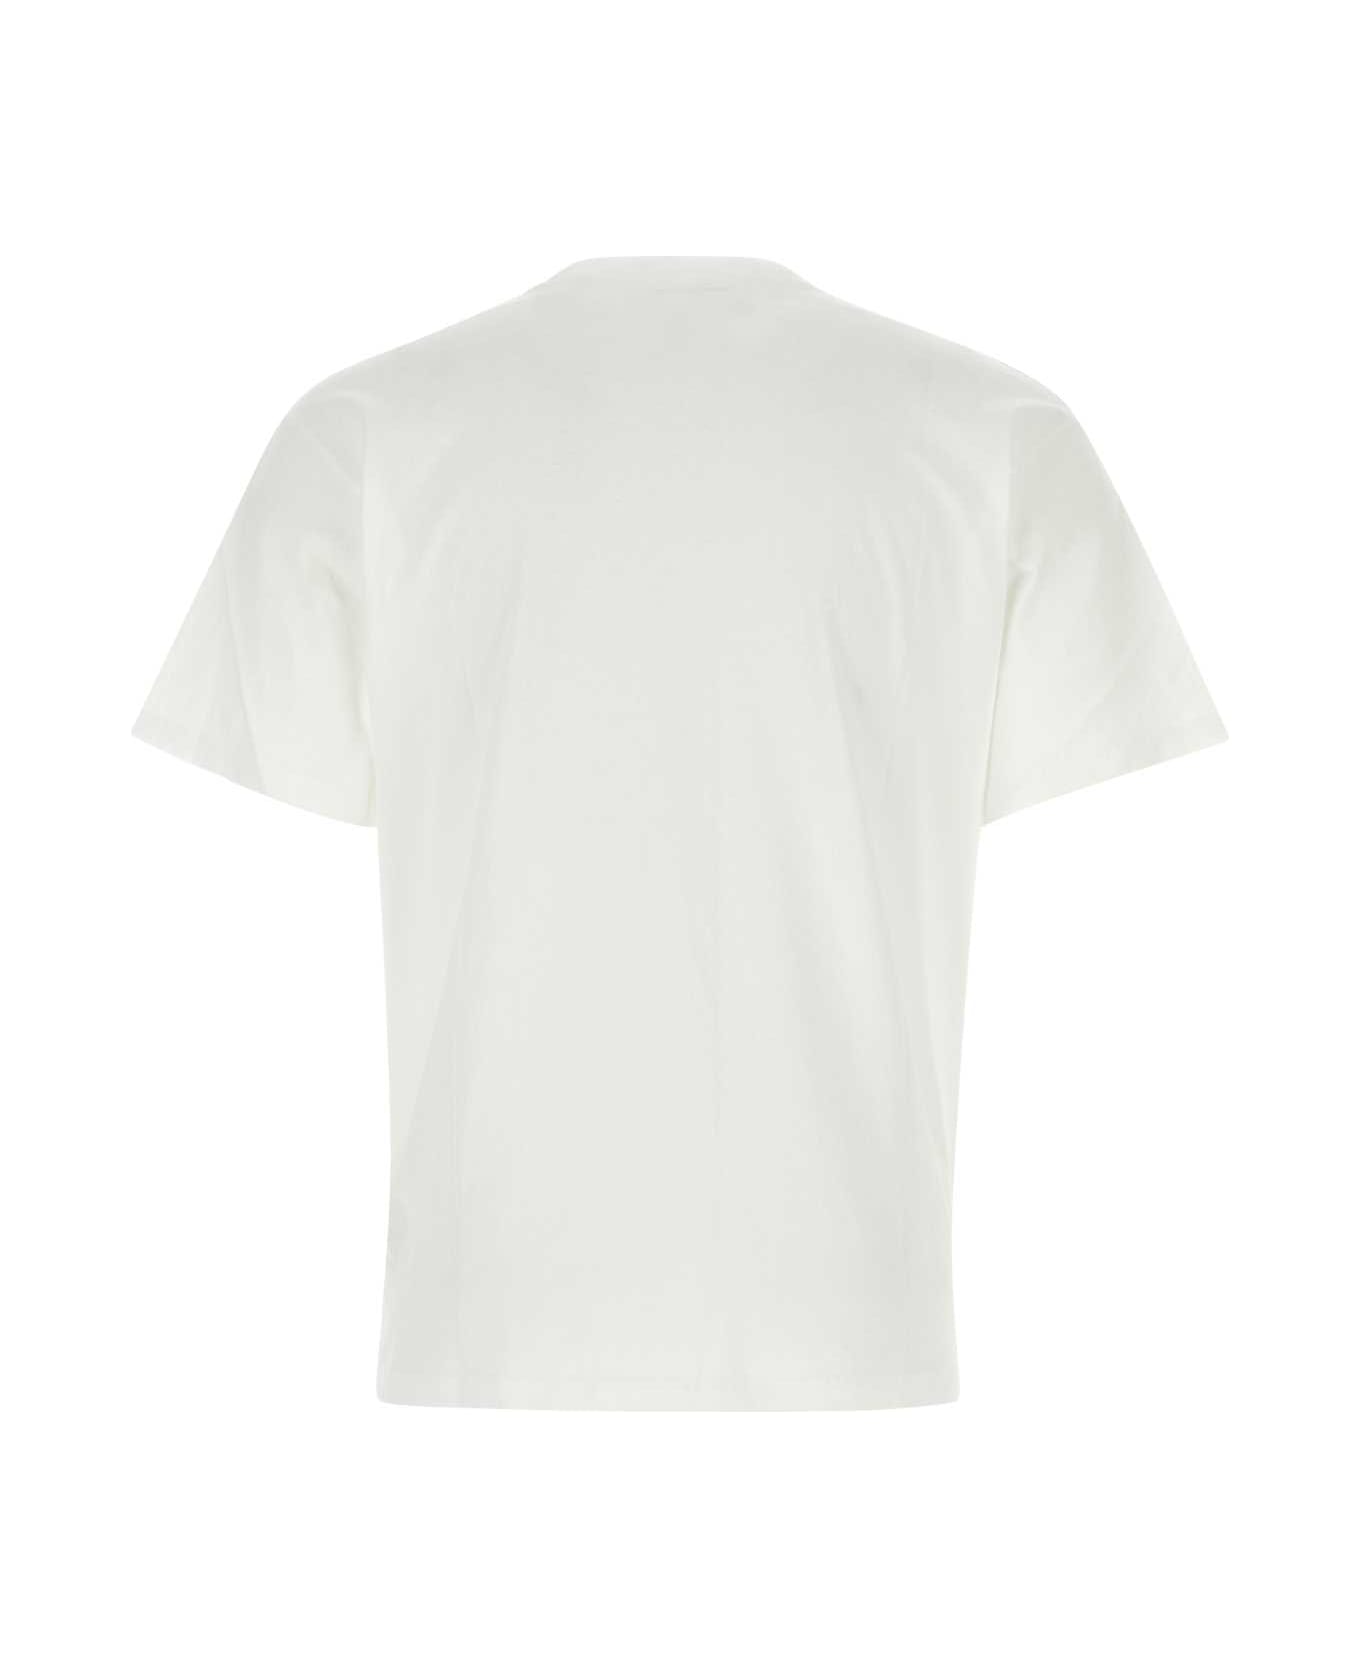 Aries White Cotton T-shirt - WHITE